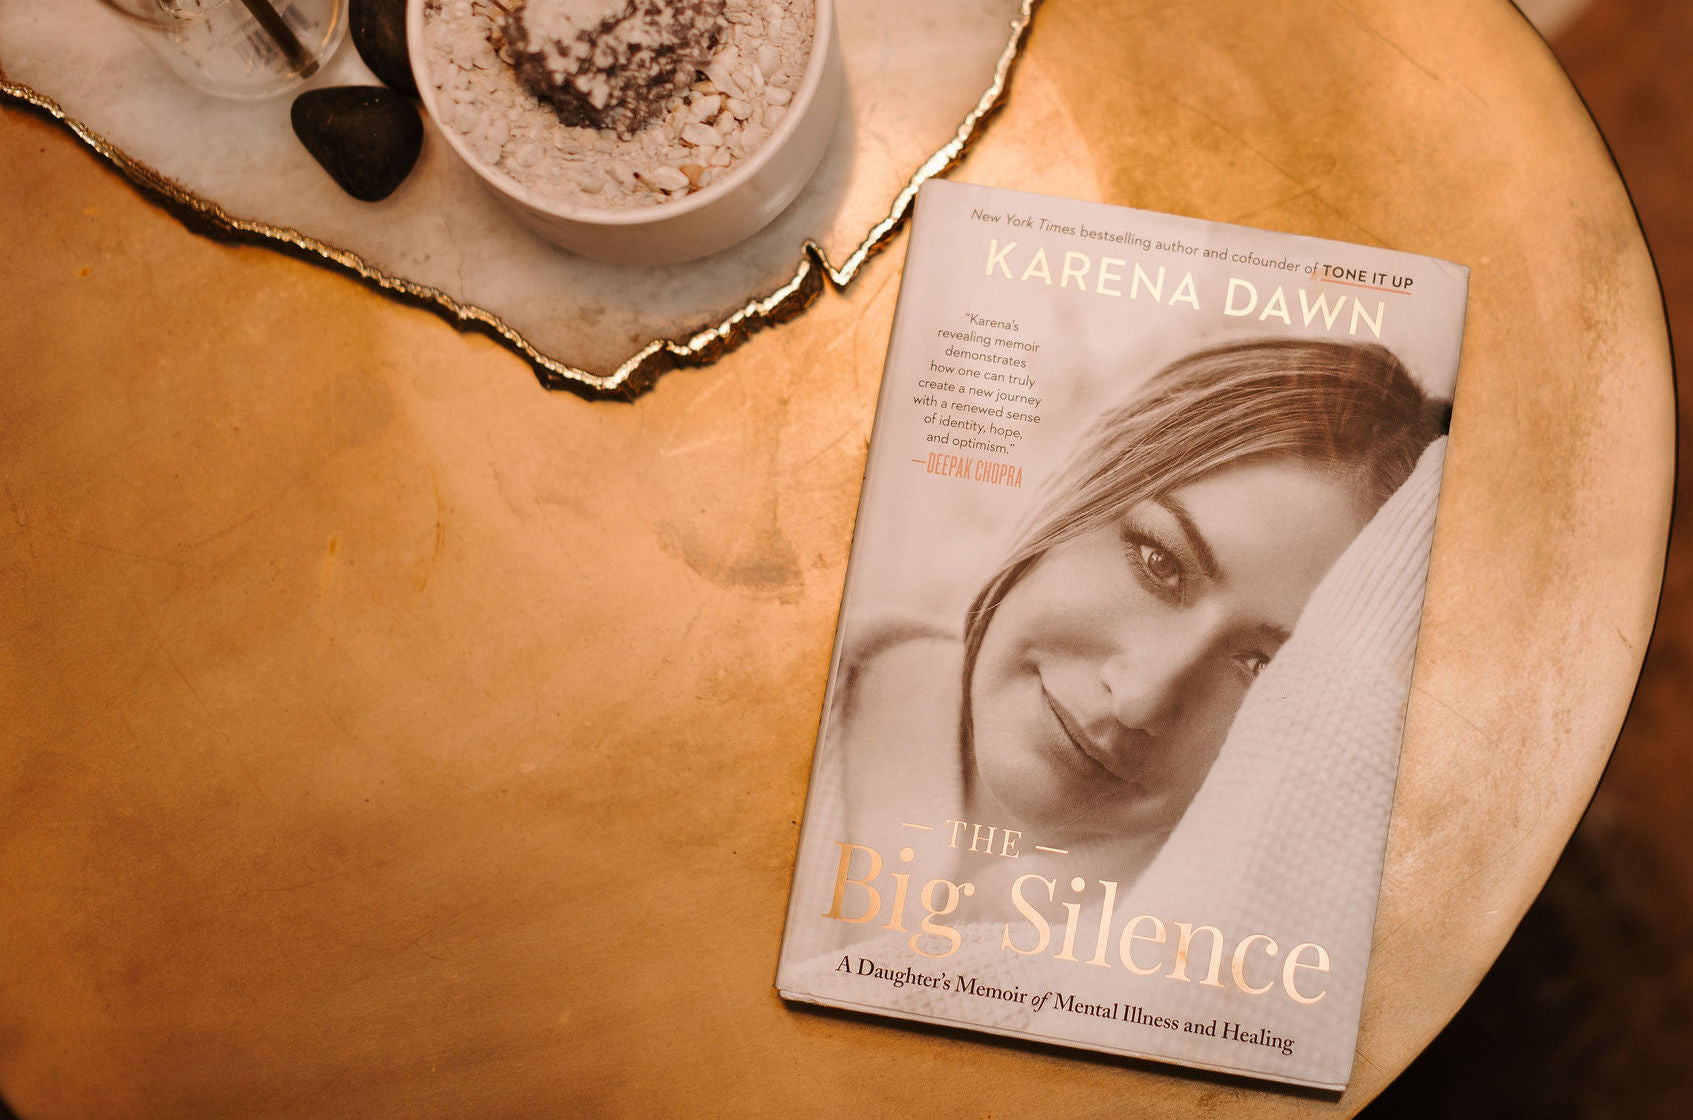 The Big Silence memoir by Karena Dawn